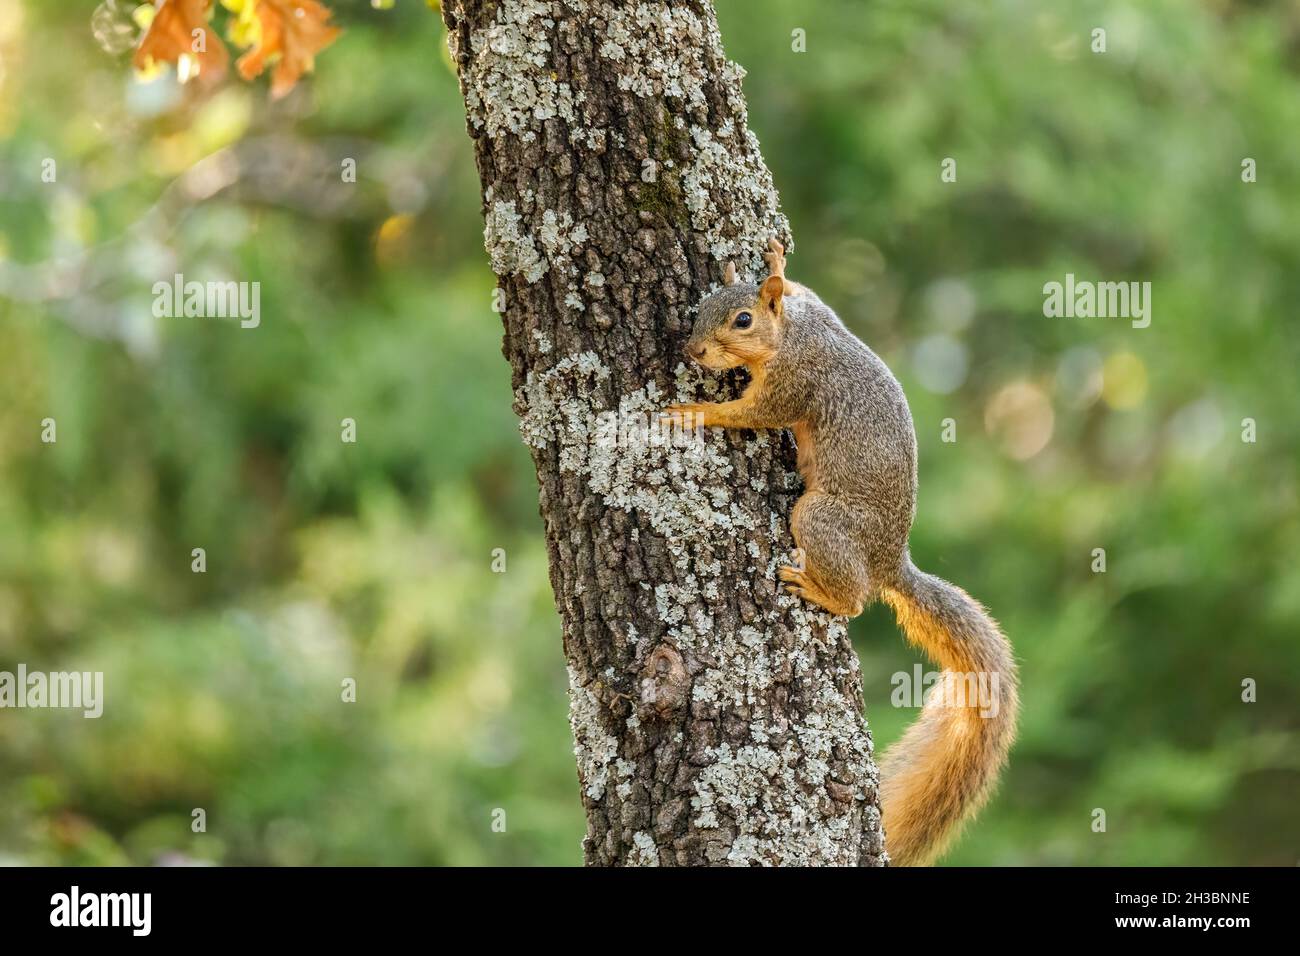 Squirrel climbing a tree Stock Photo